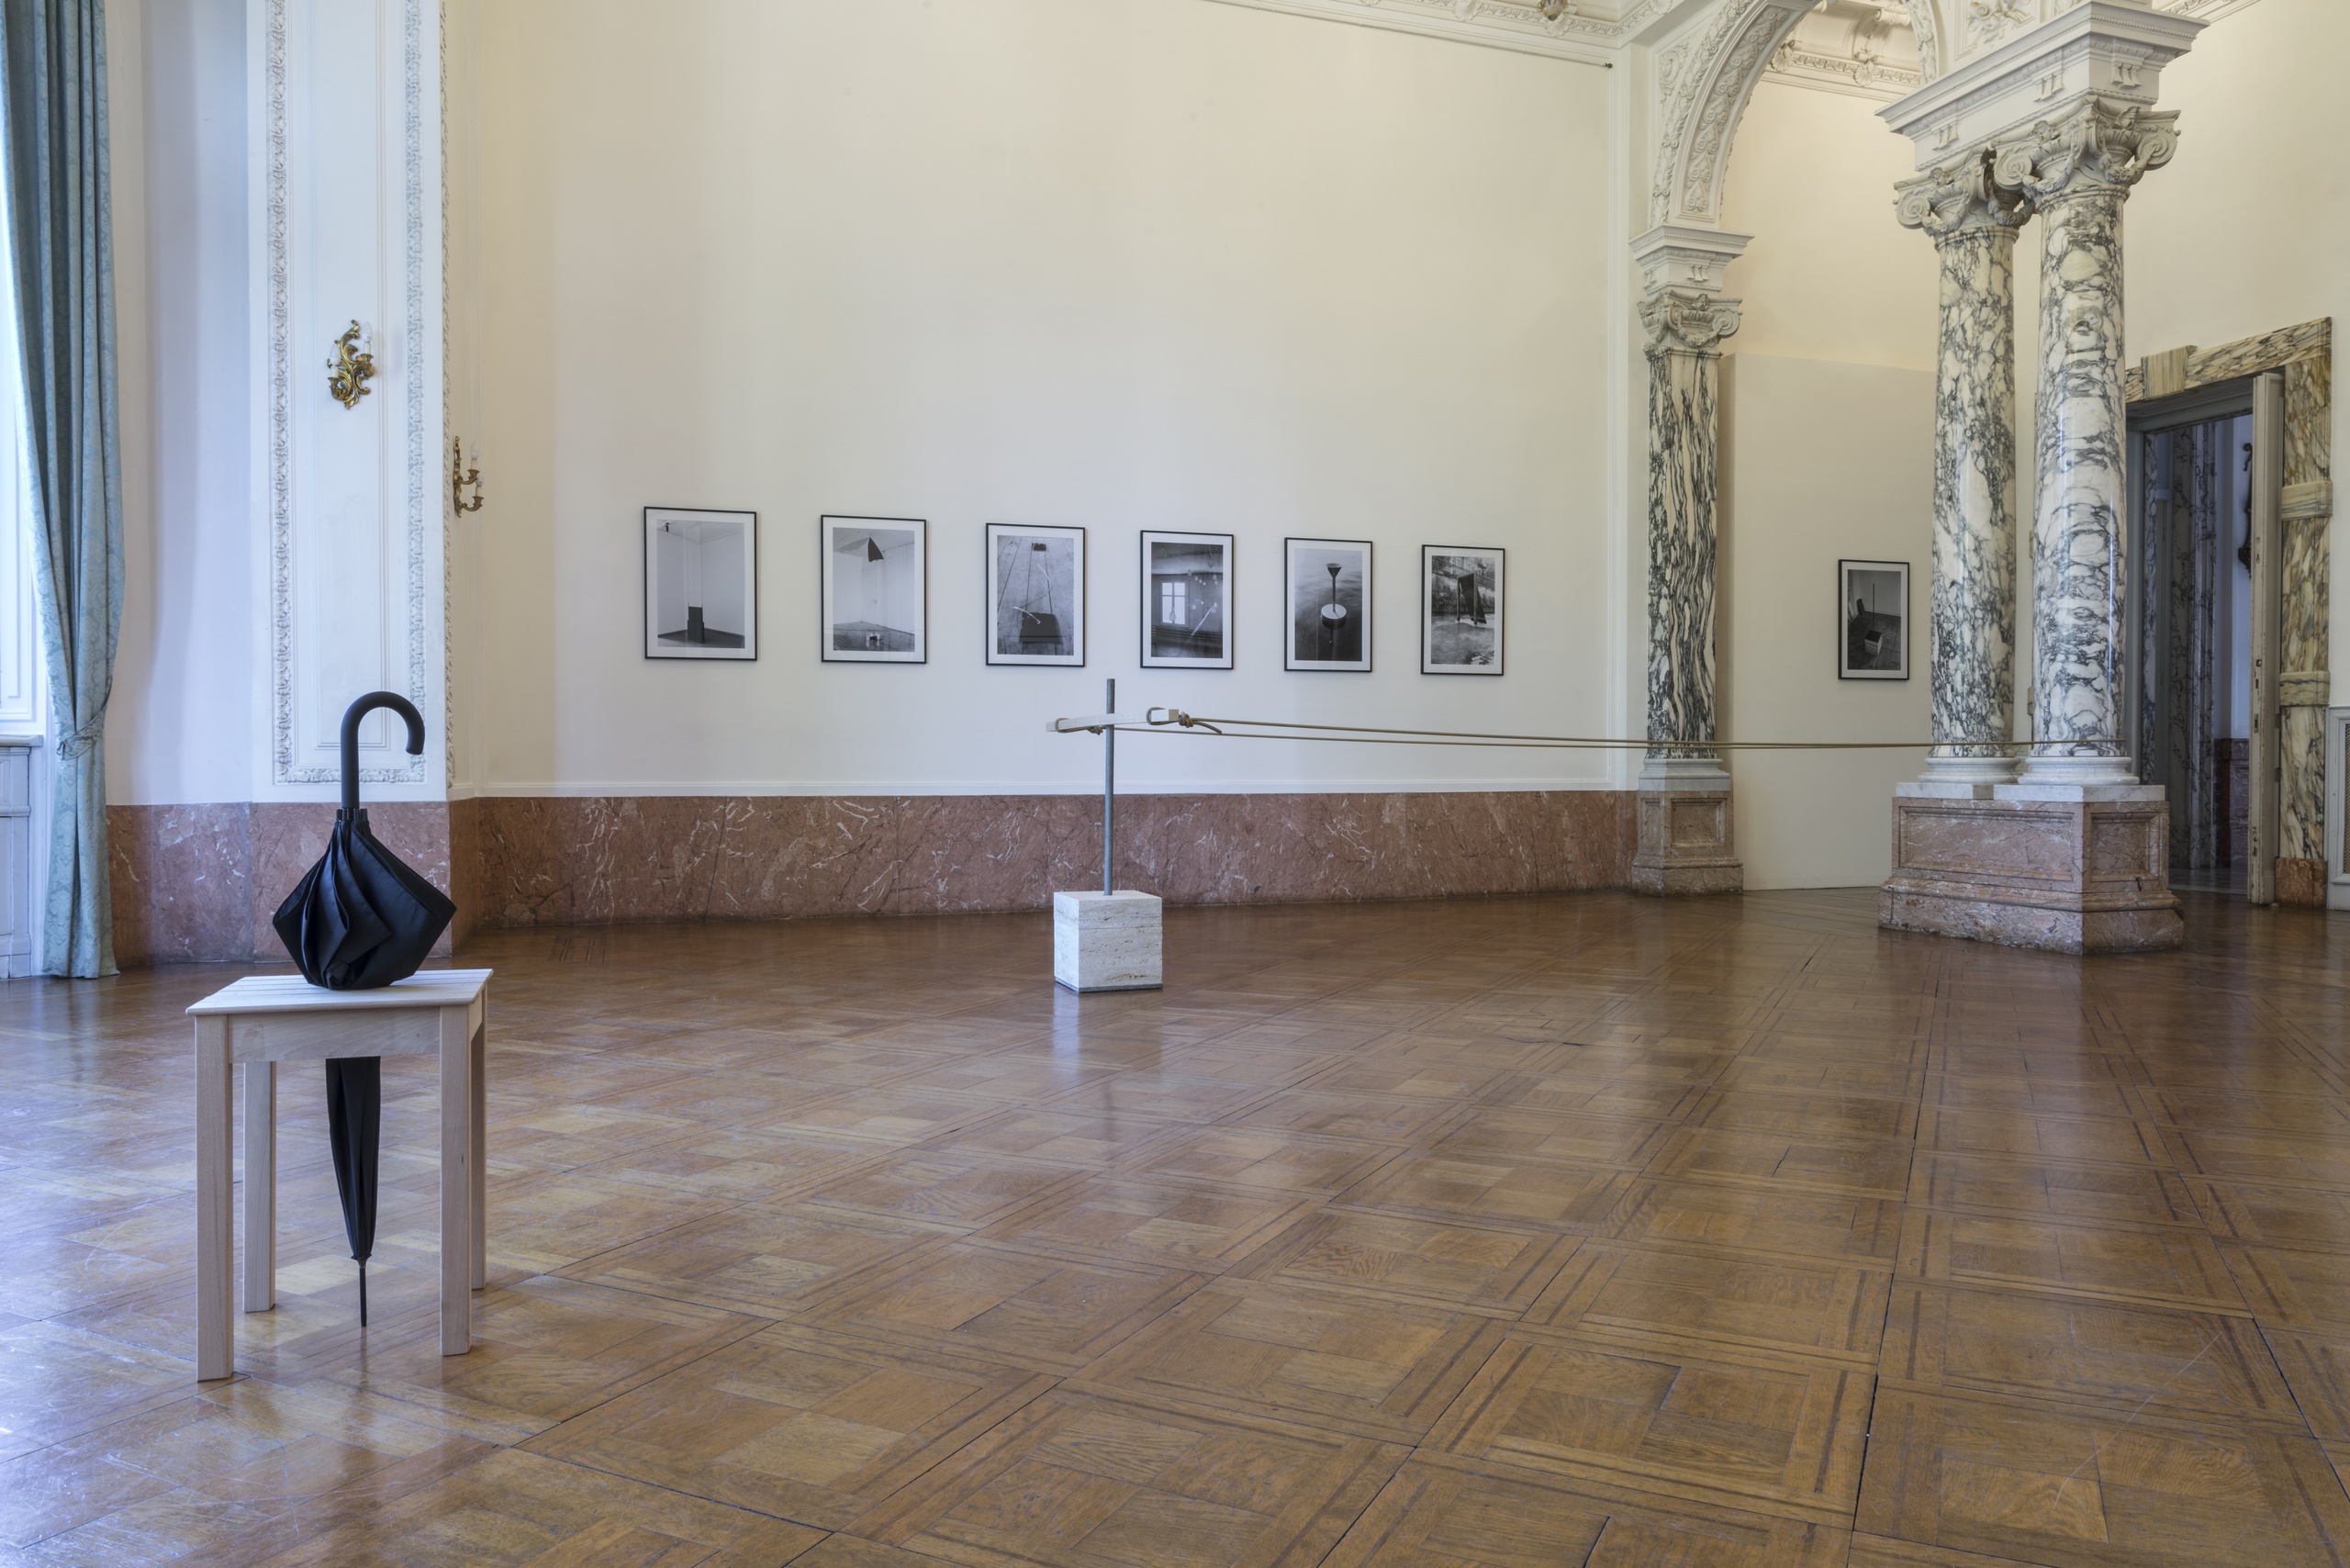 Installation views, Roman Signer, Skulptur/Fotografie, Istituto Svizzero, Rome, Italy. Photo: ©OKNO studio